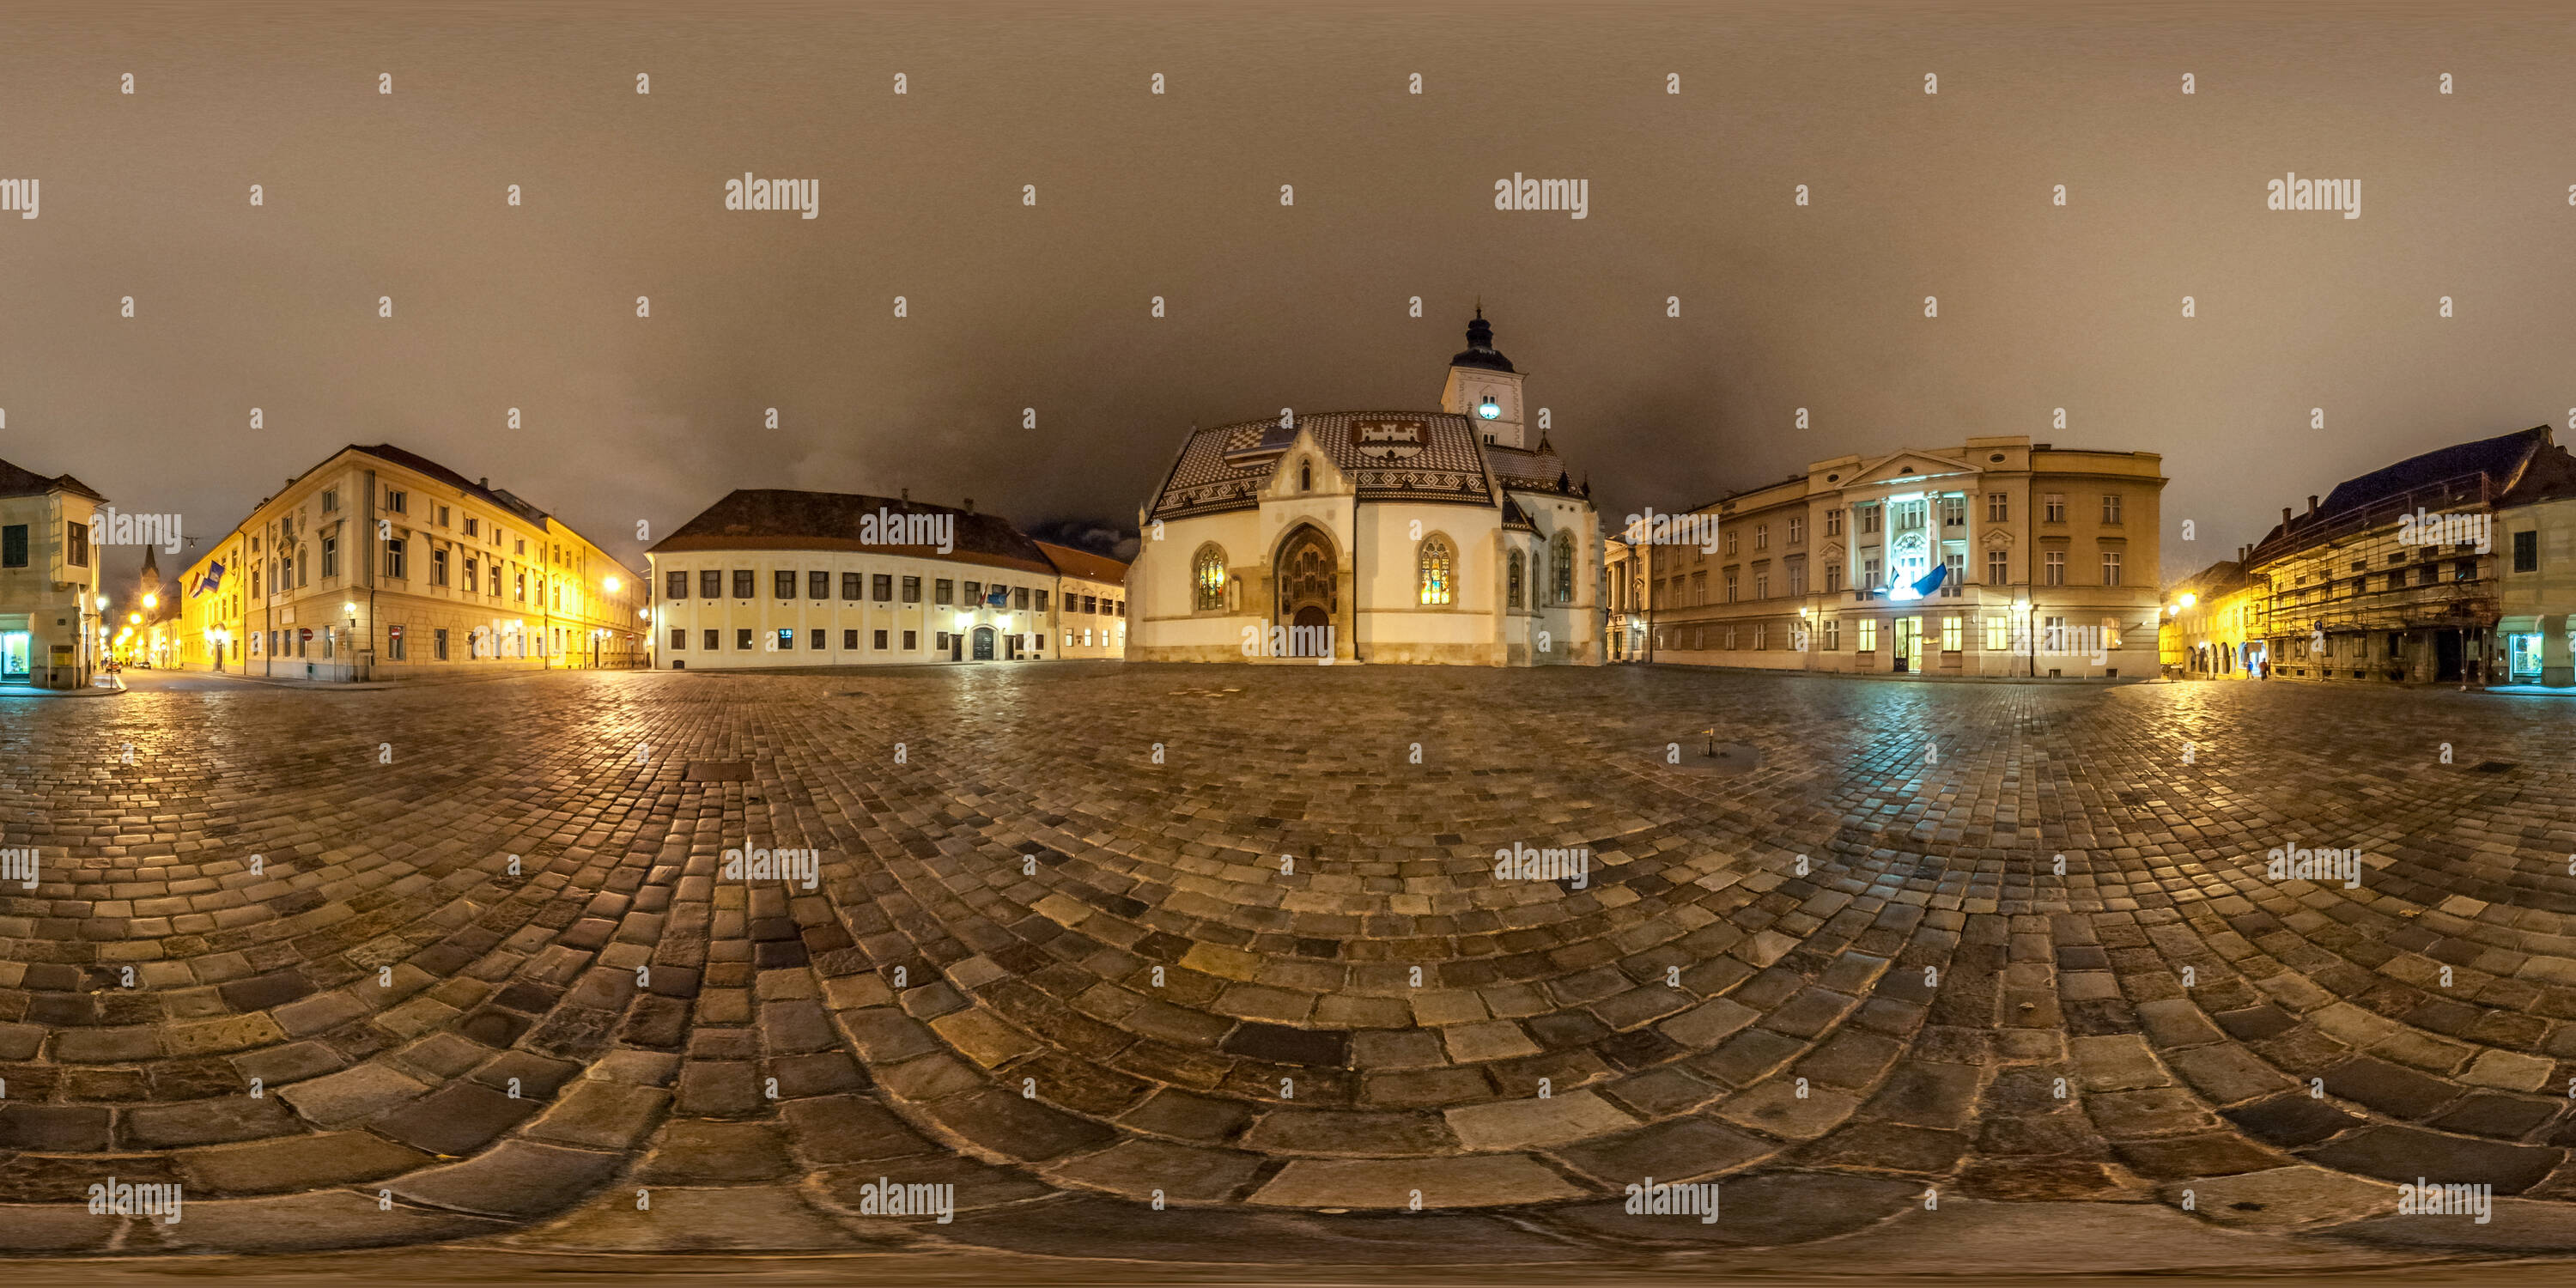 360 degree panoramic view of Saint Mark's Square